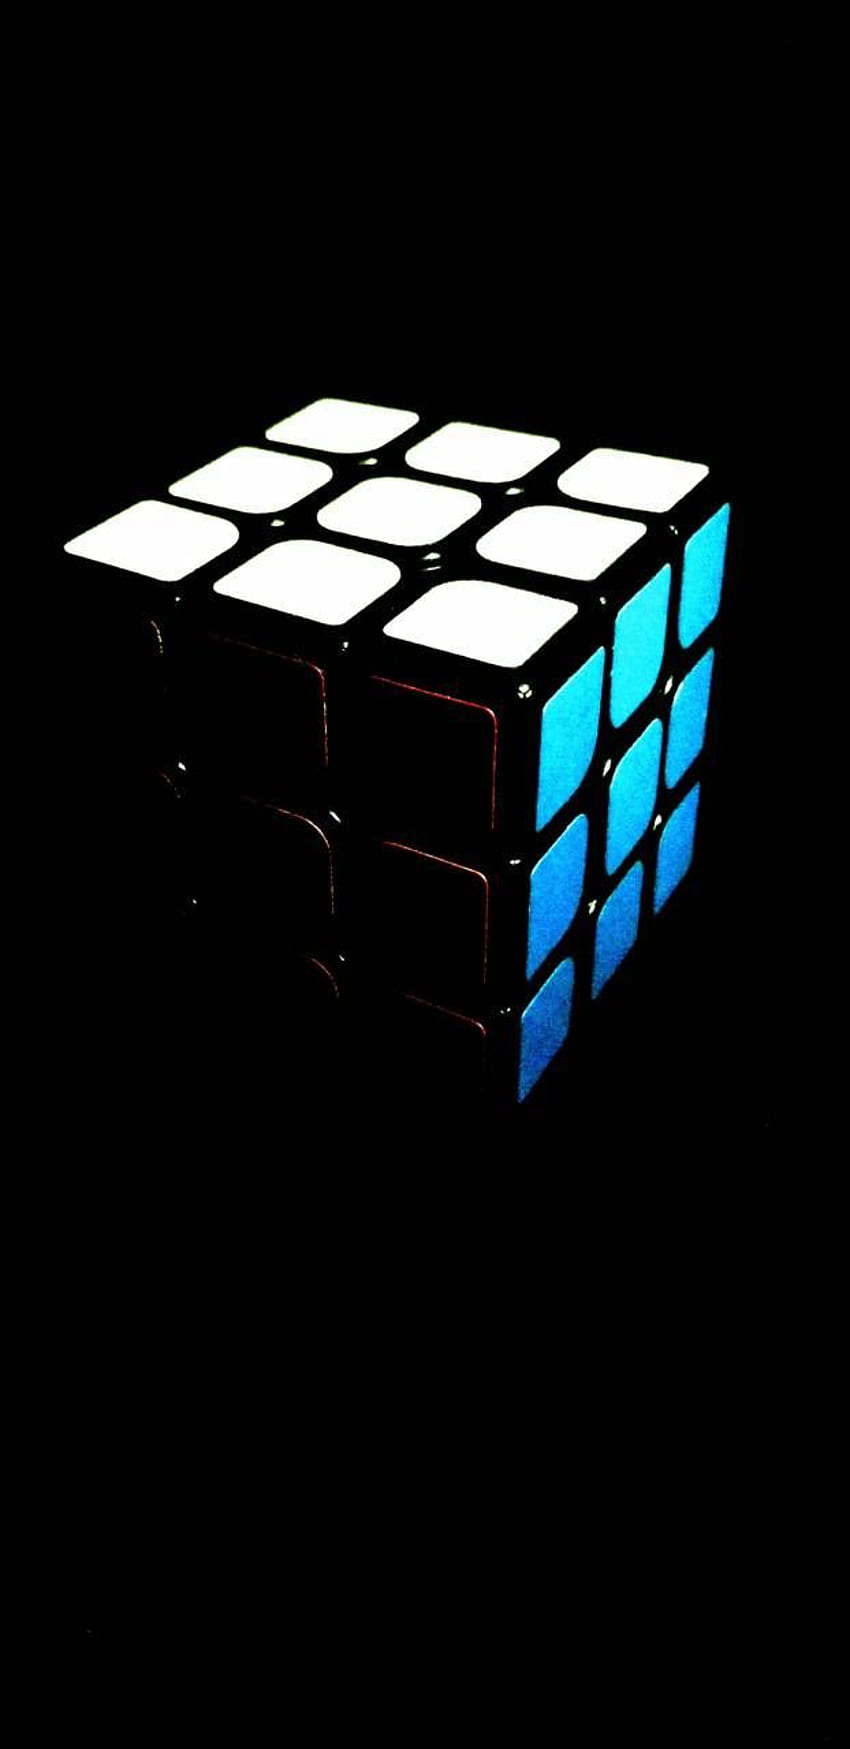 Rubiks Cube Wallpaper 76 images